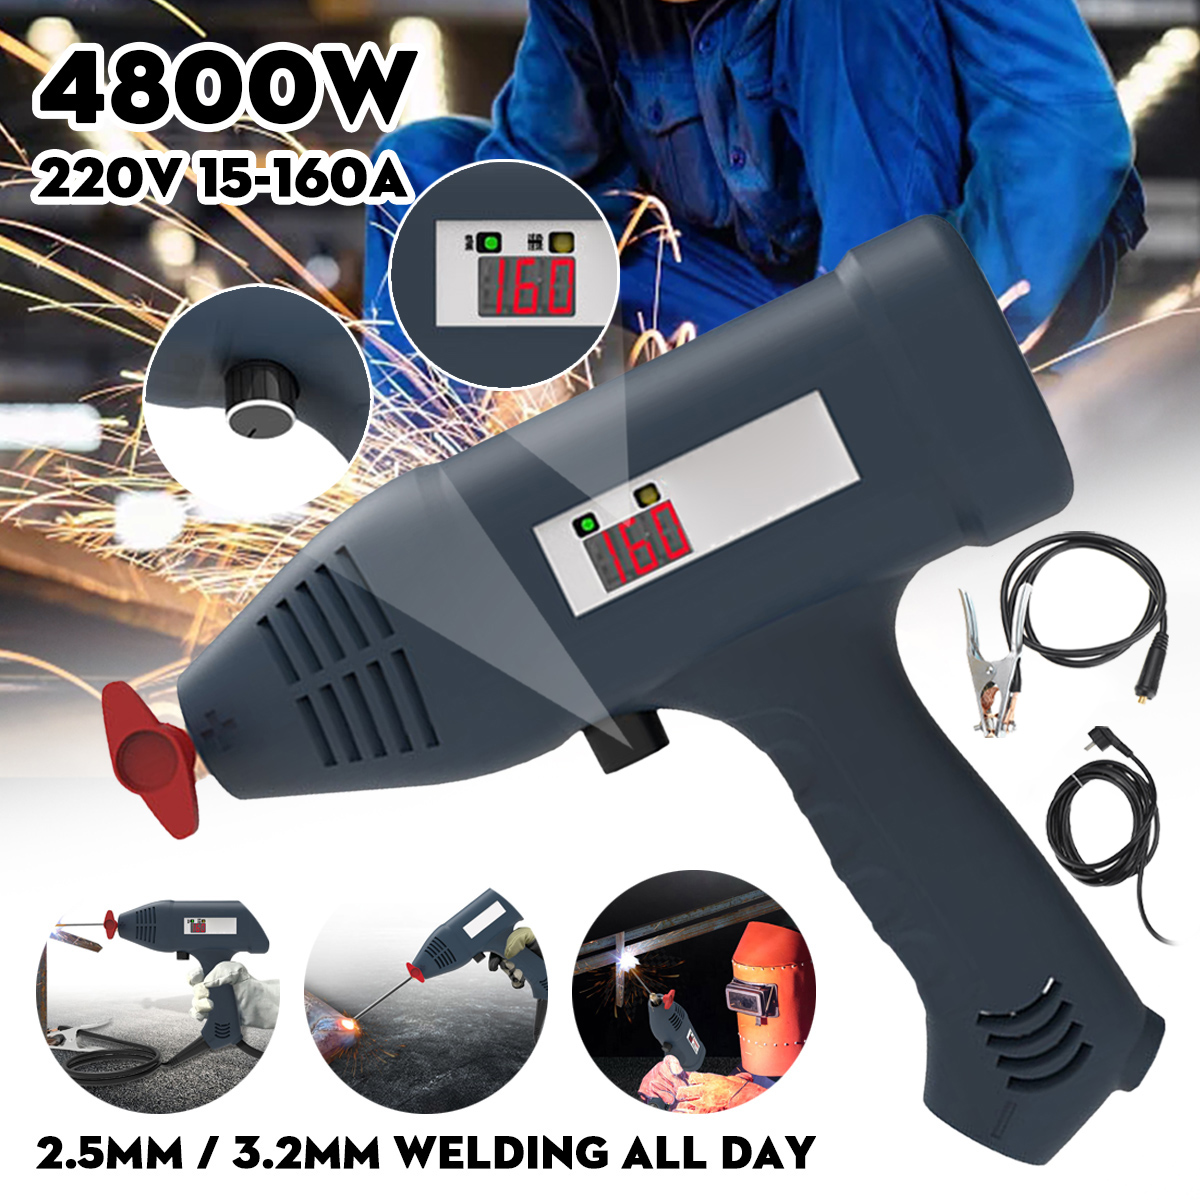 4800W-220V-Digital-Autamatic-Welding-Machine-Handheld-Arc-Welding-Guns-Welder-Tool-0-160A-1890648-1